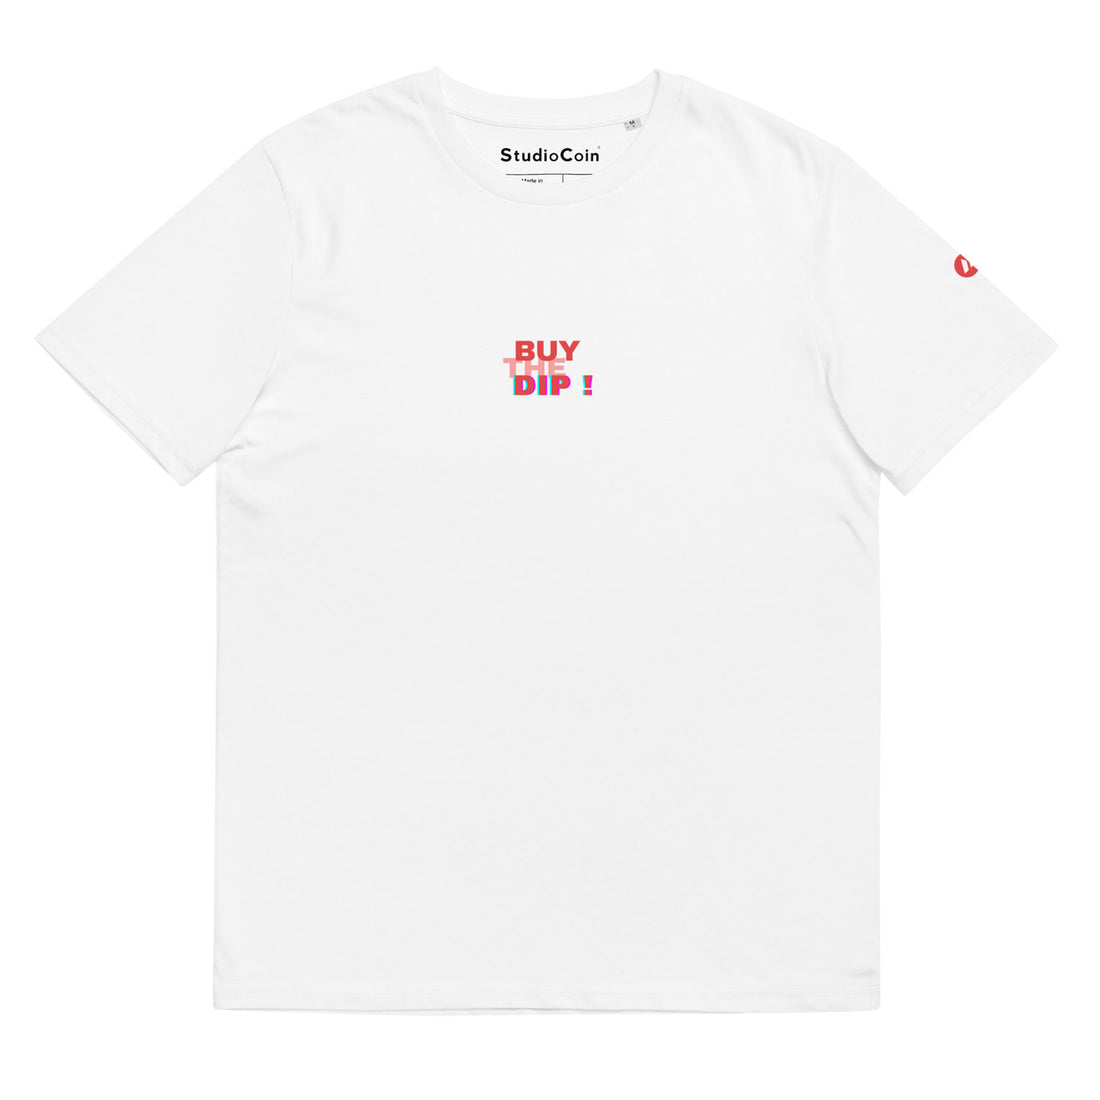 buy the dip avax tshirt white